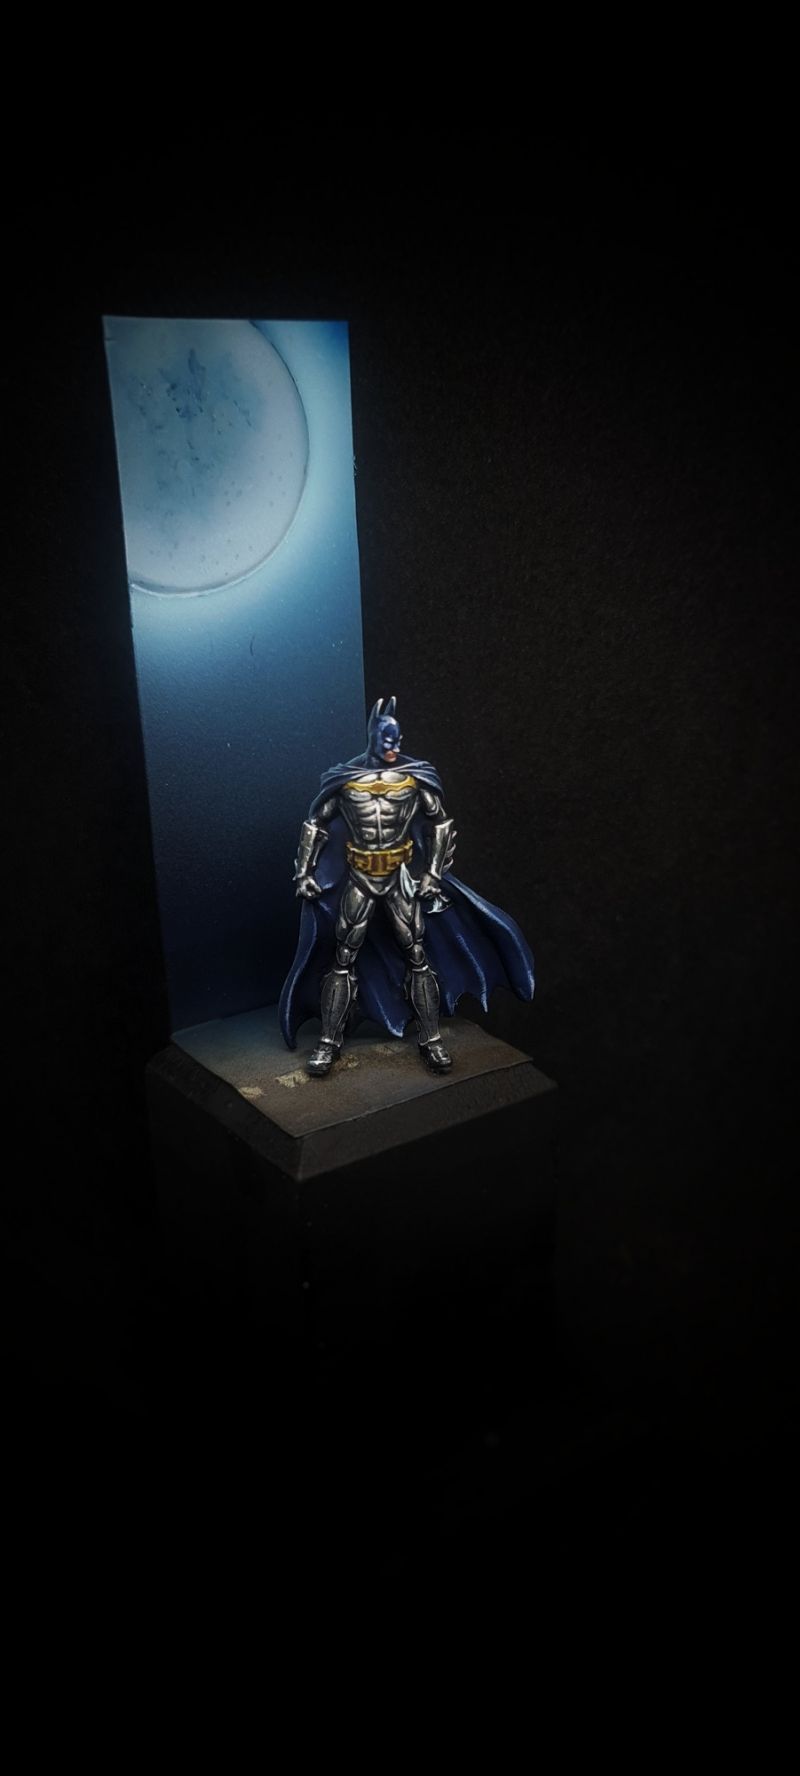 The dark knight